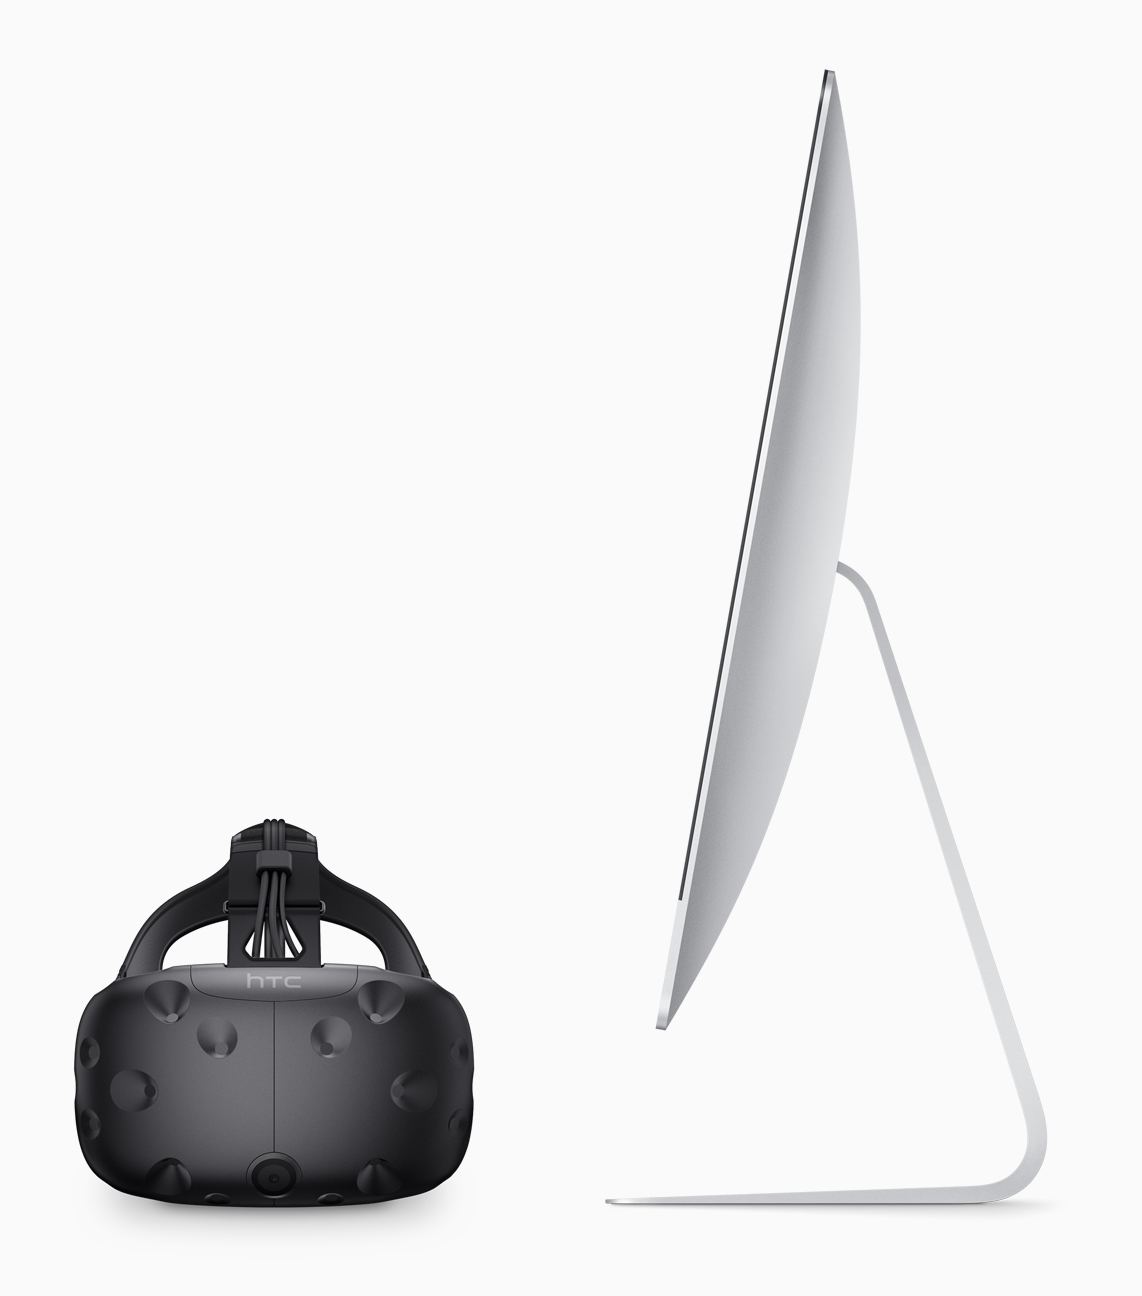 iMac and HTC virtual reality player